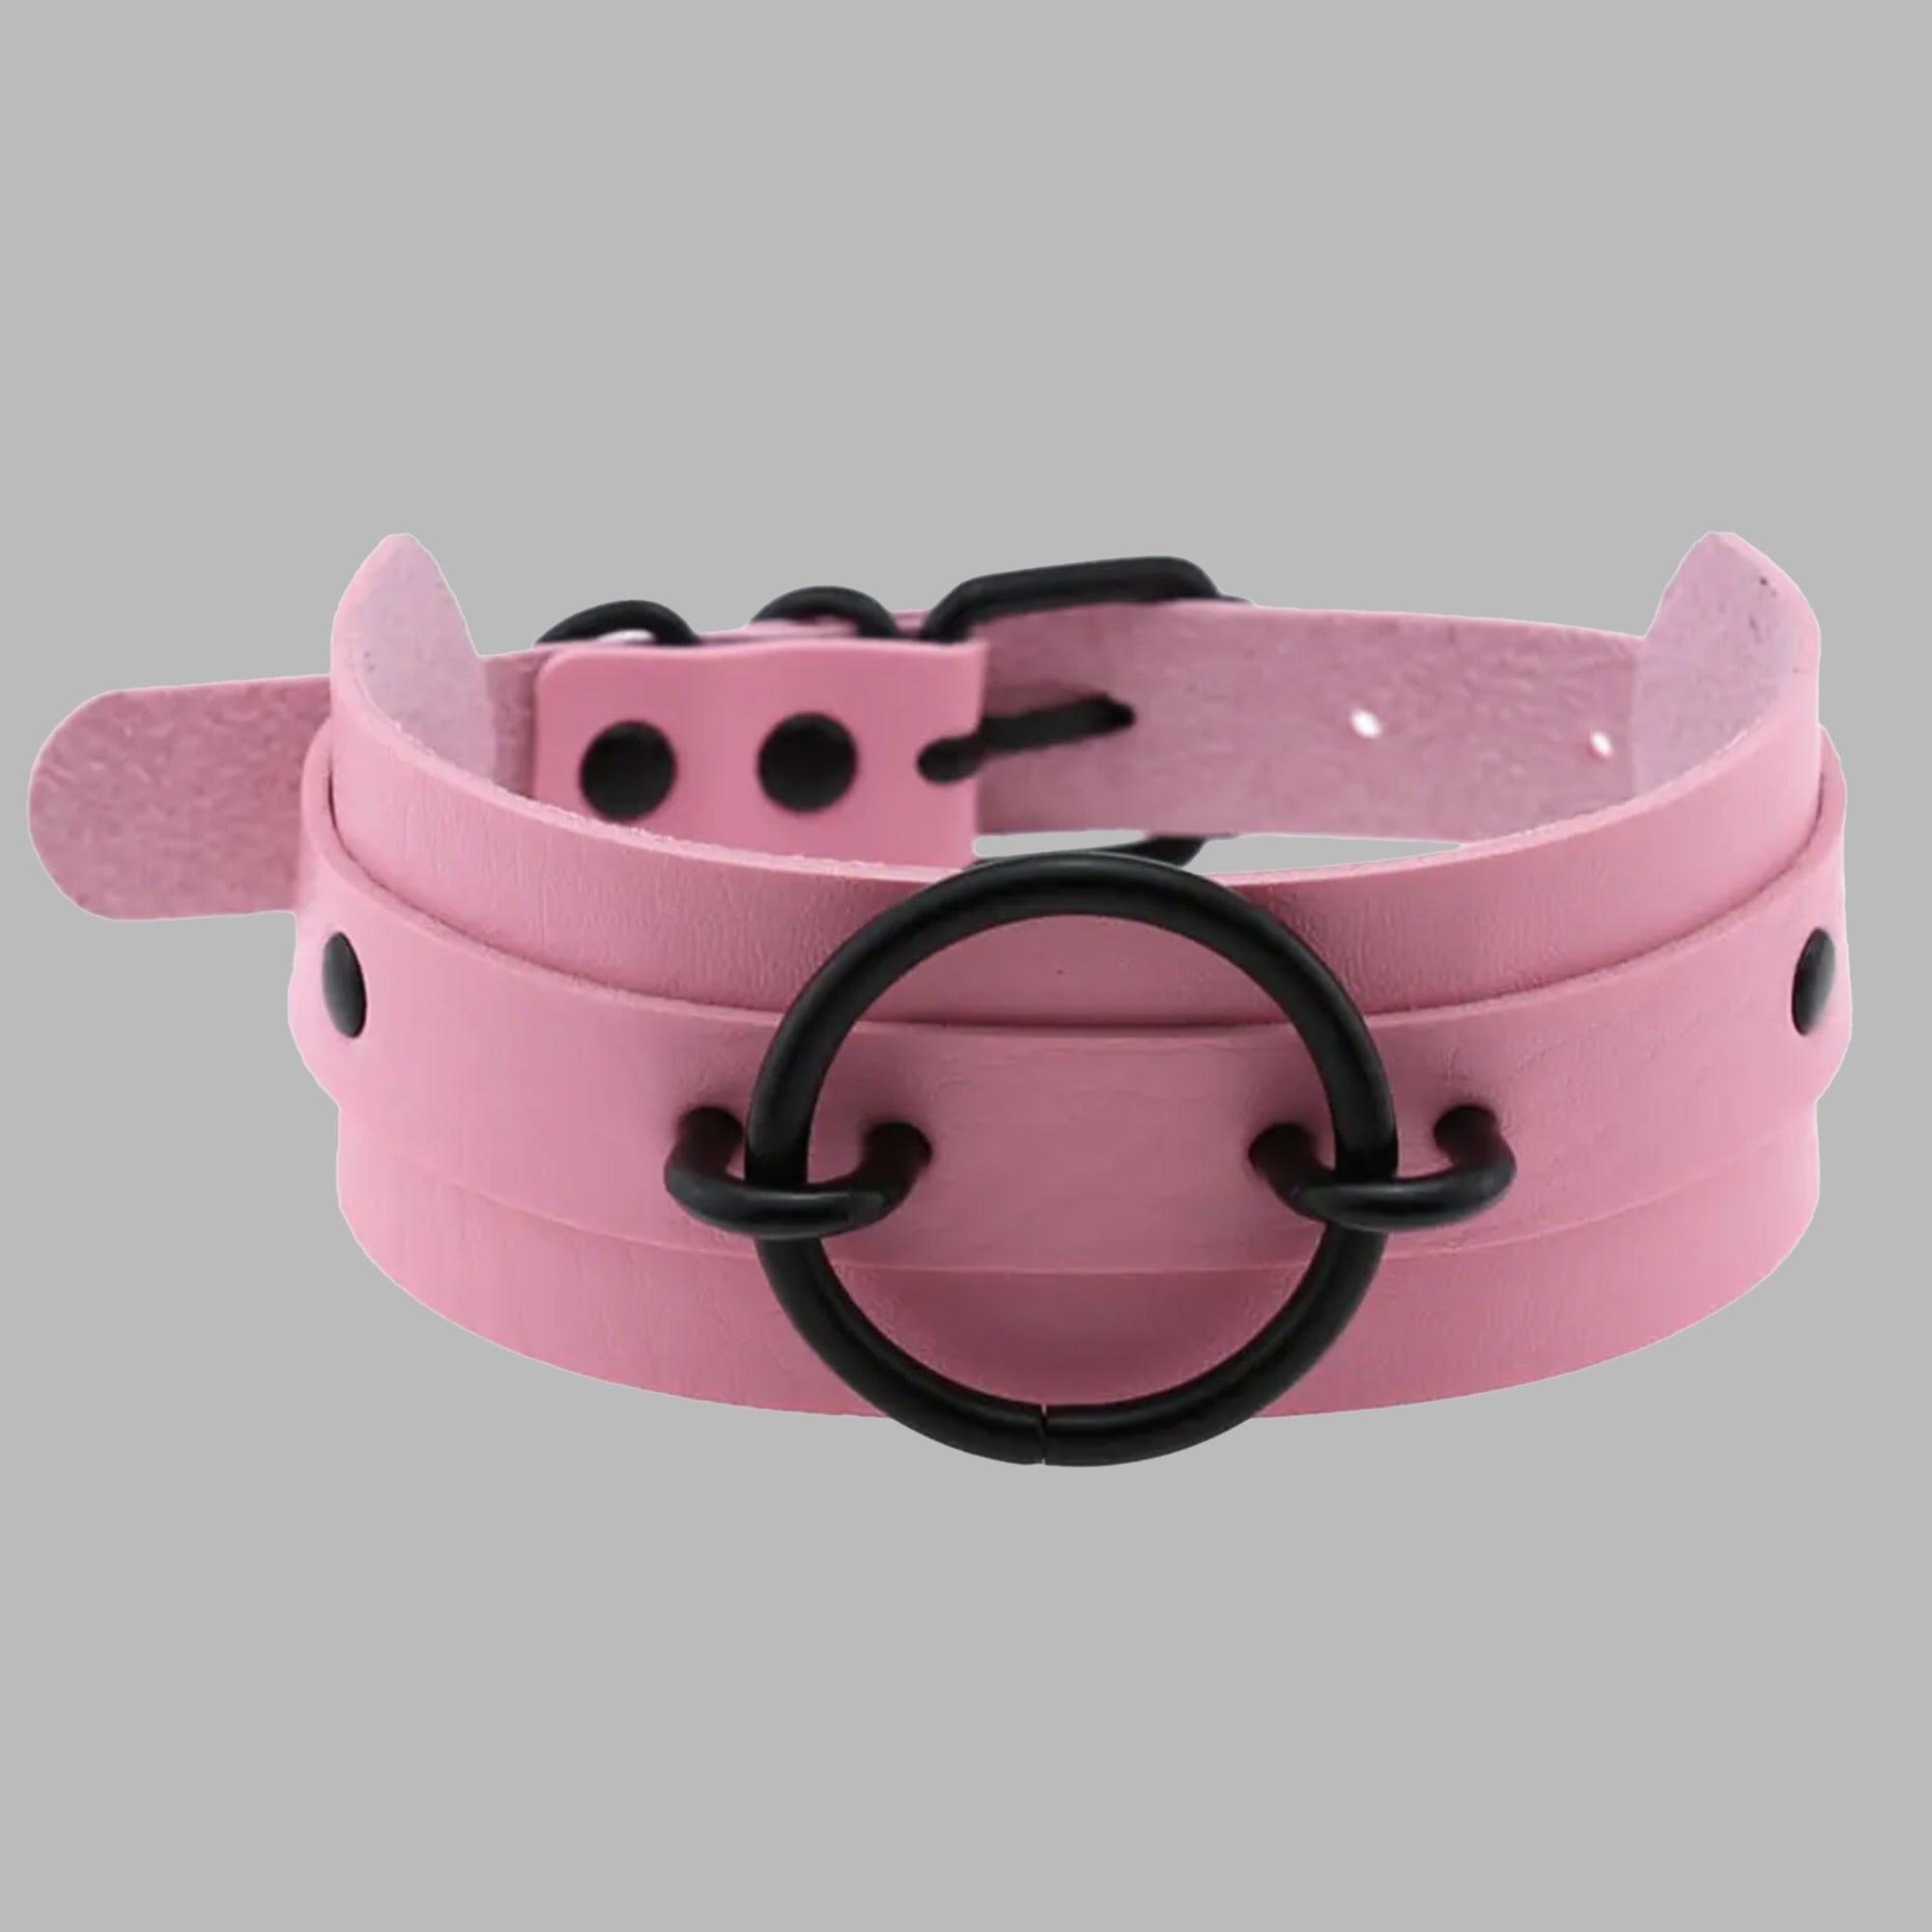 Fixed O Ring Choker Collar - Baby Pink & Black